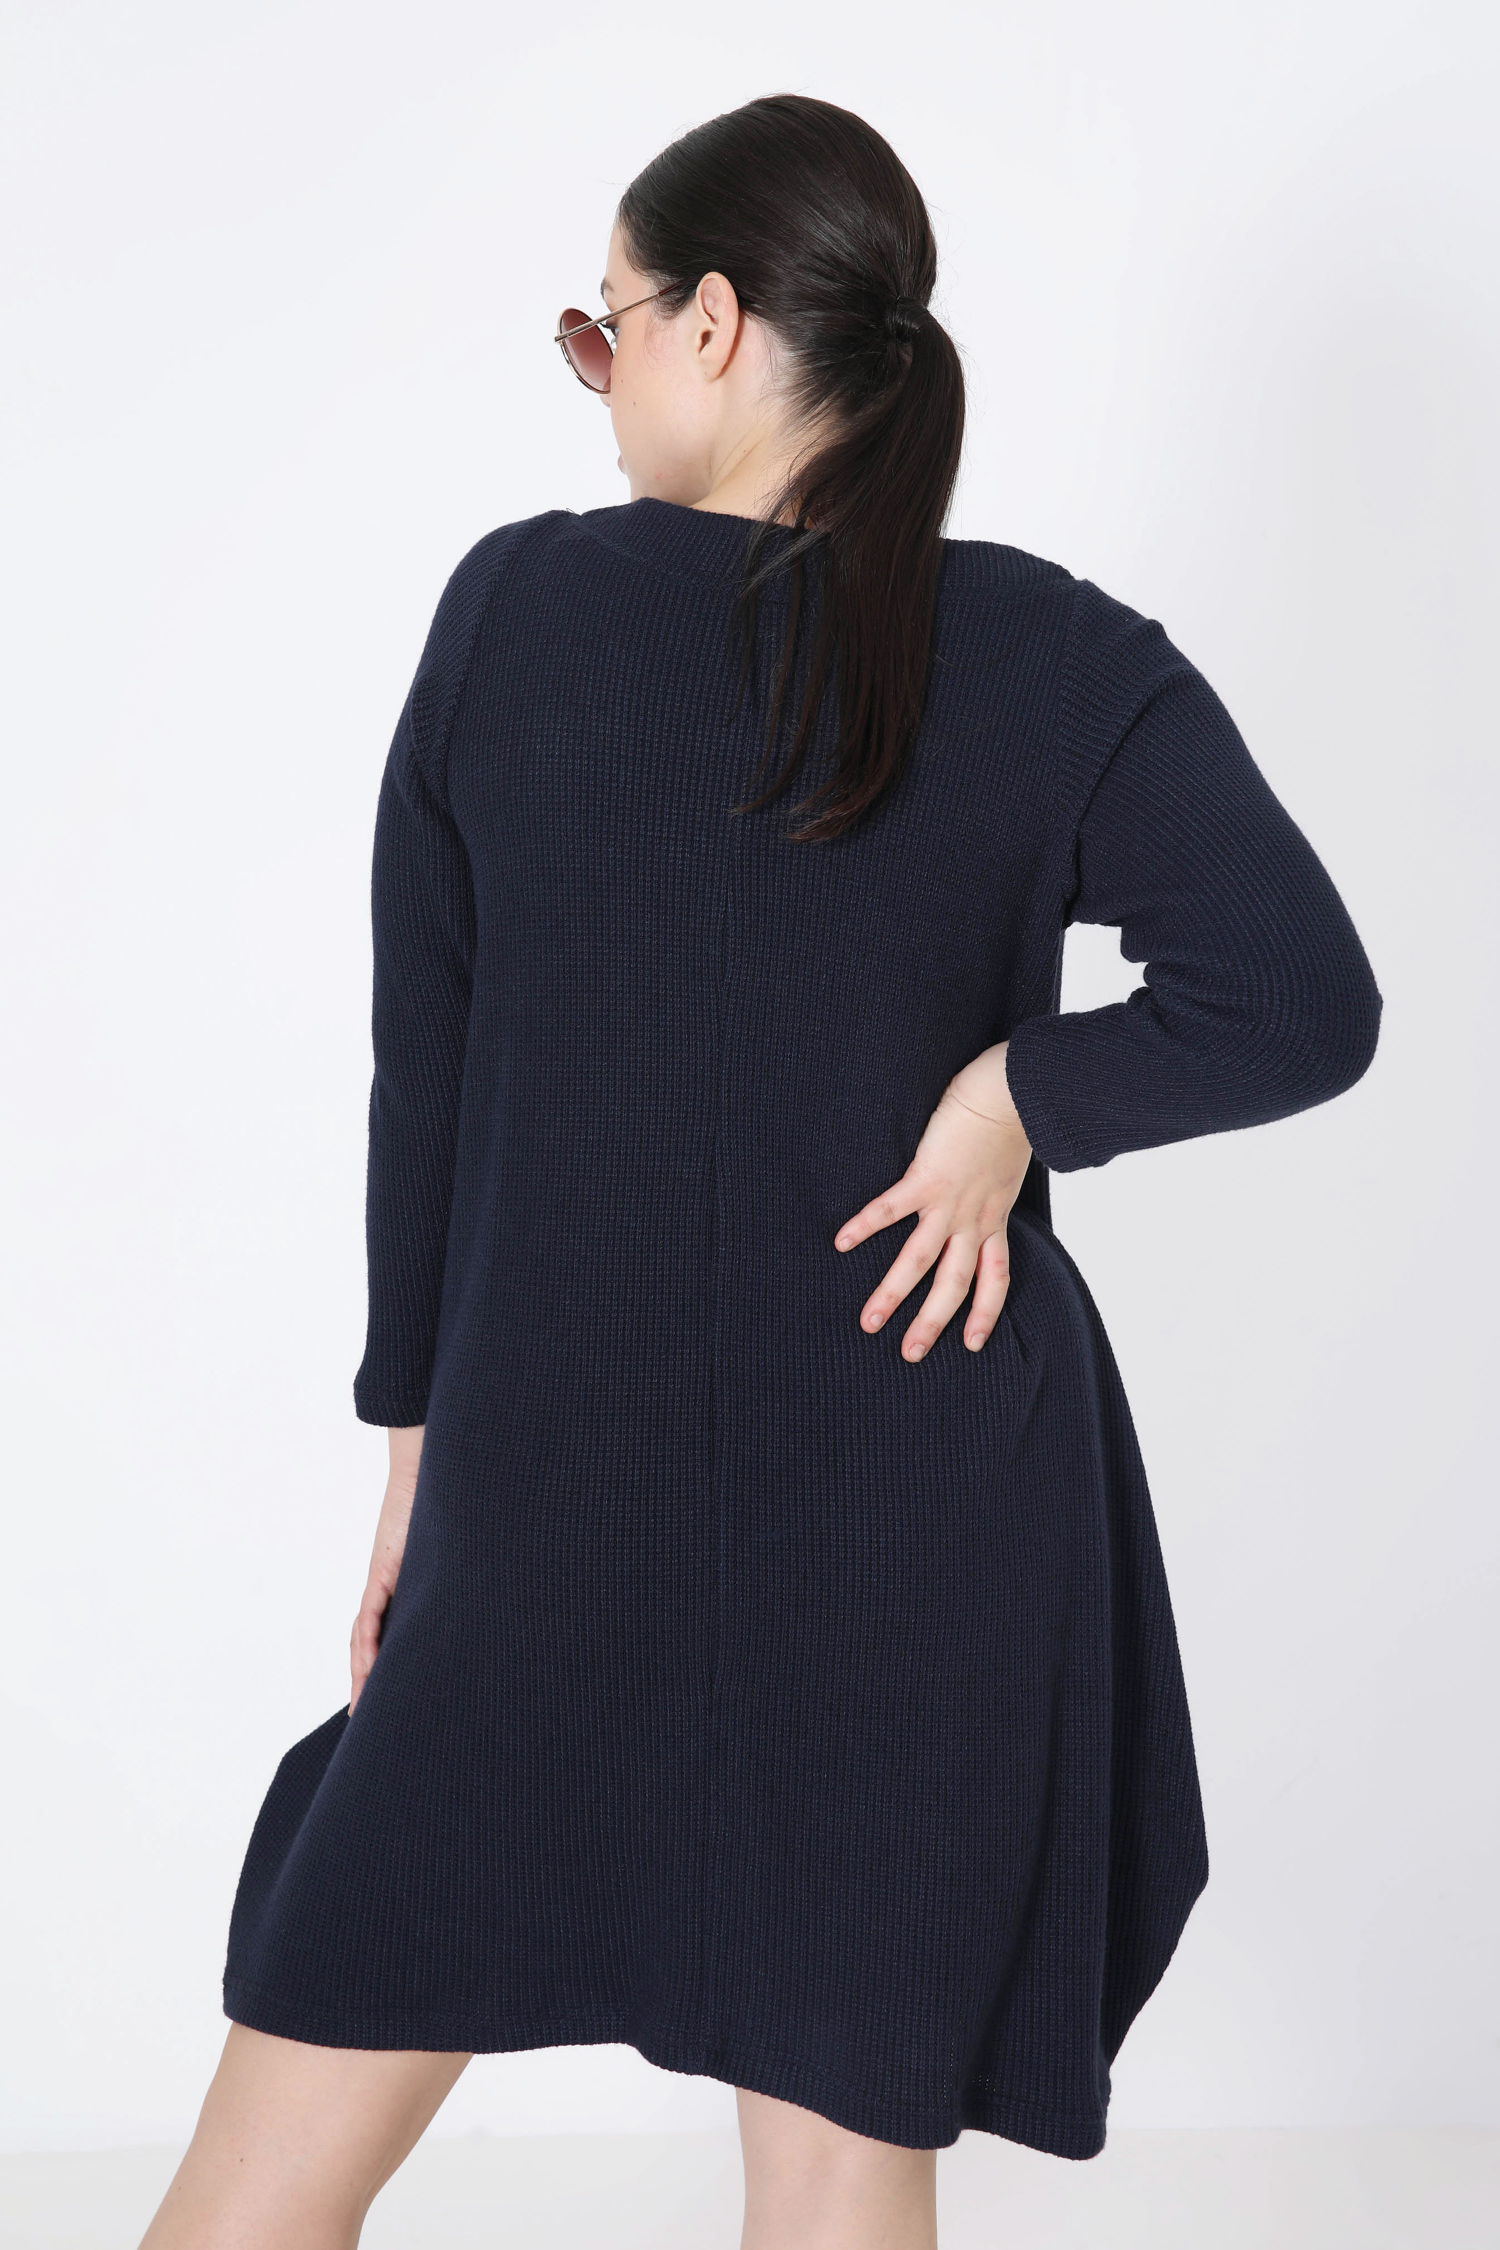 Plain knit sweater dress